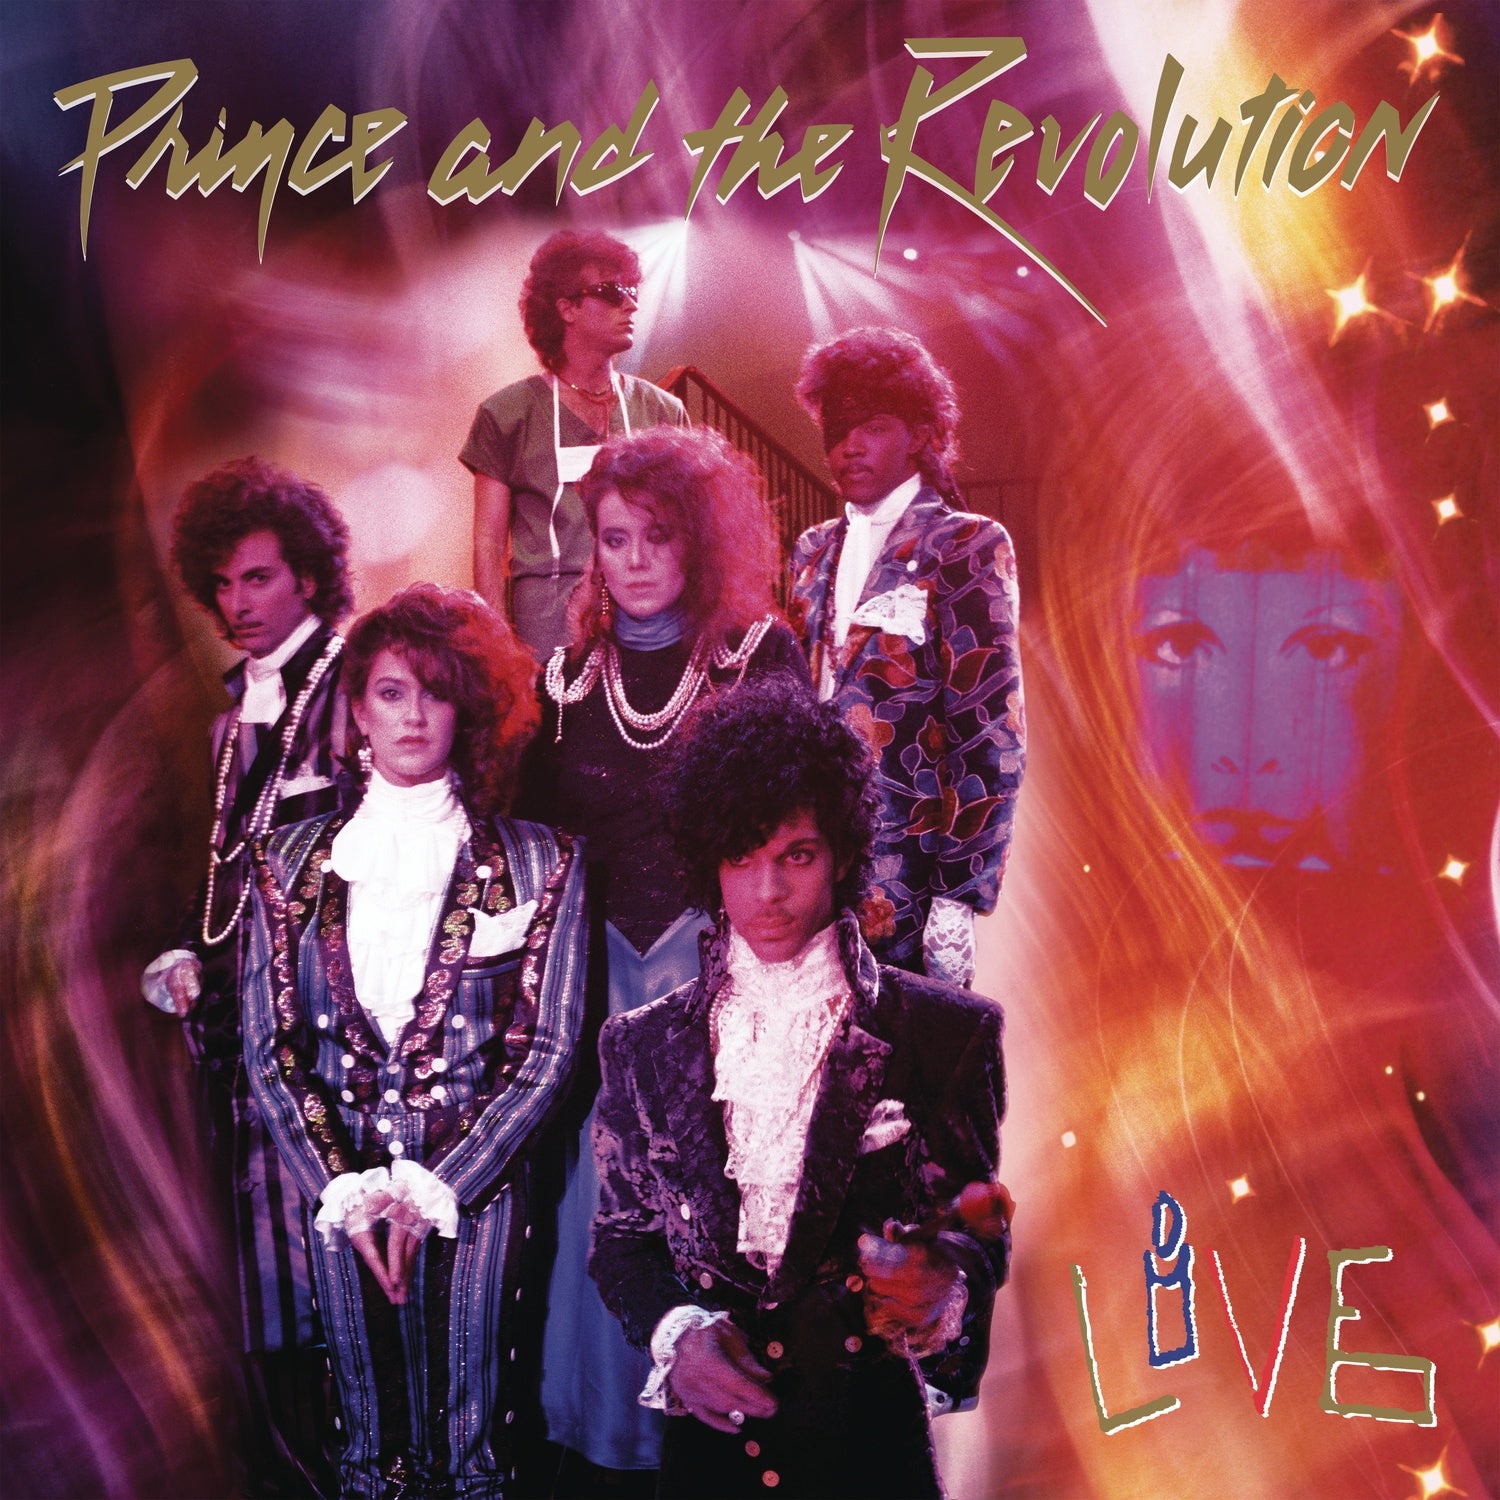 Prince And The Revolution – Live - New 3 LP Record 2022 NPG Vinyl - Rock / Funk / Pop